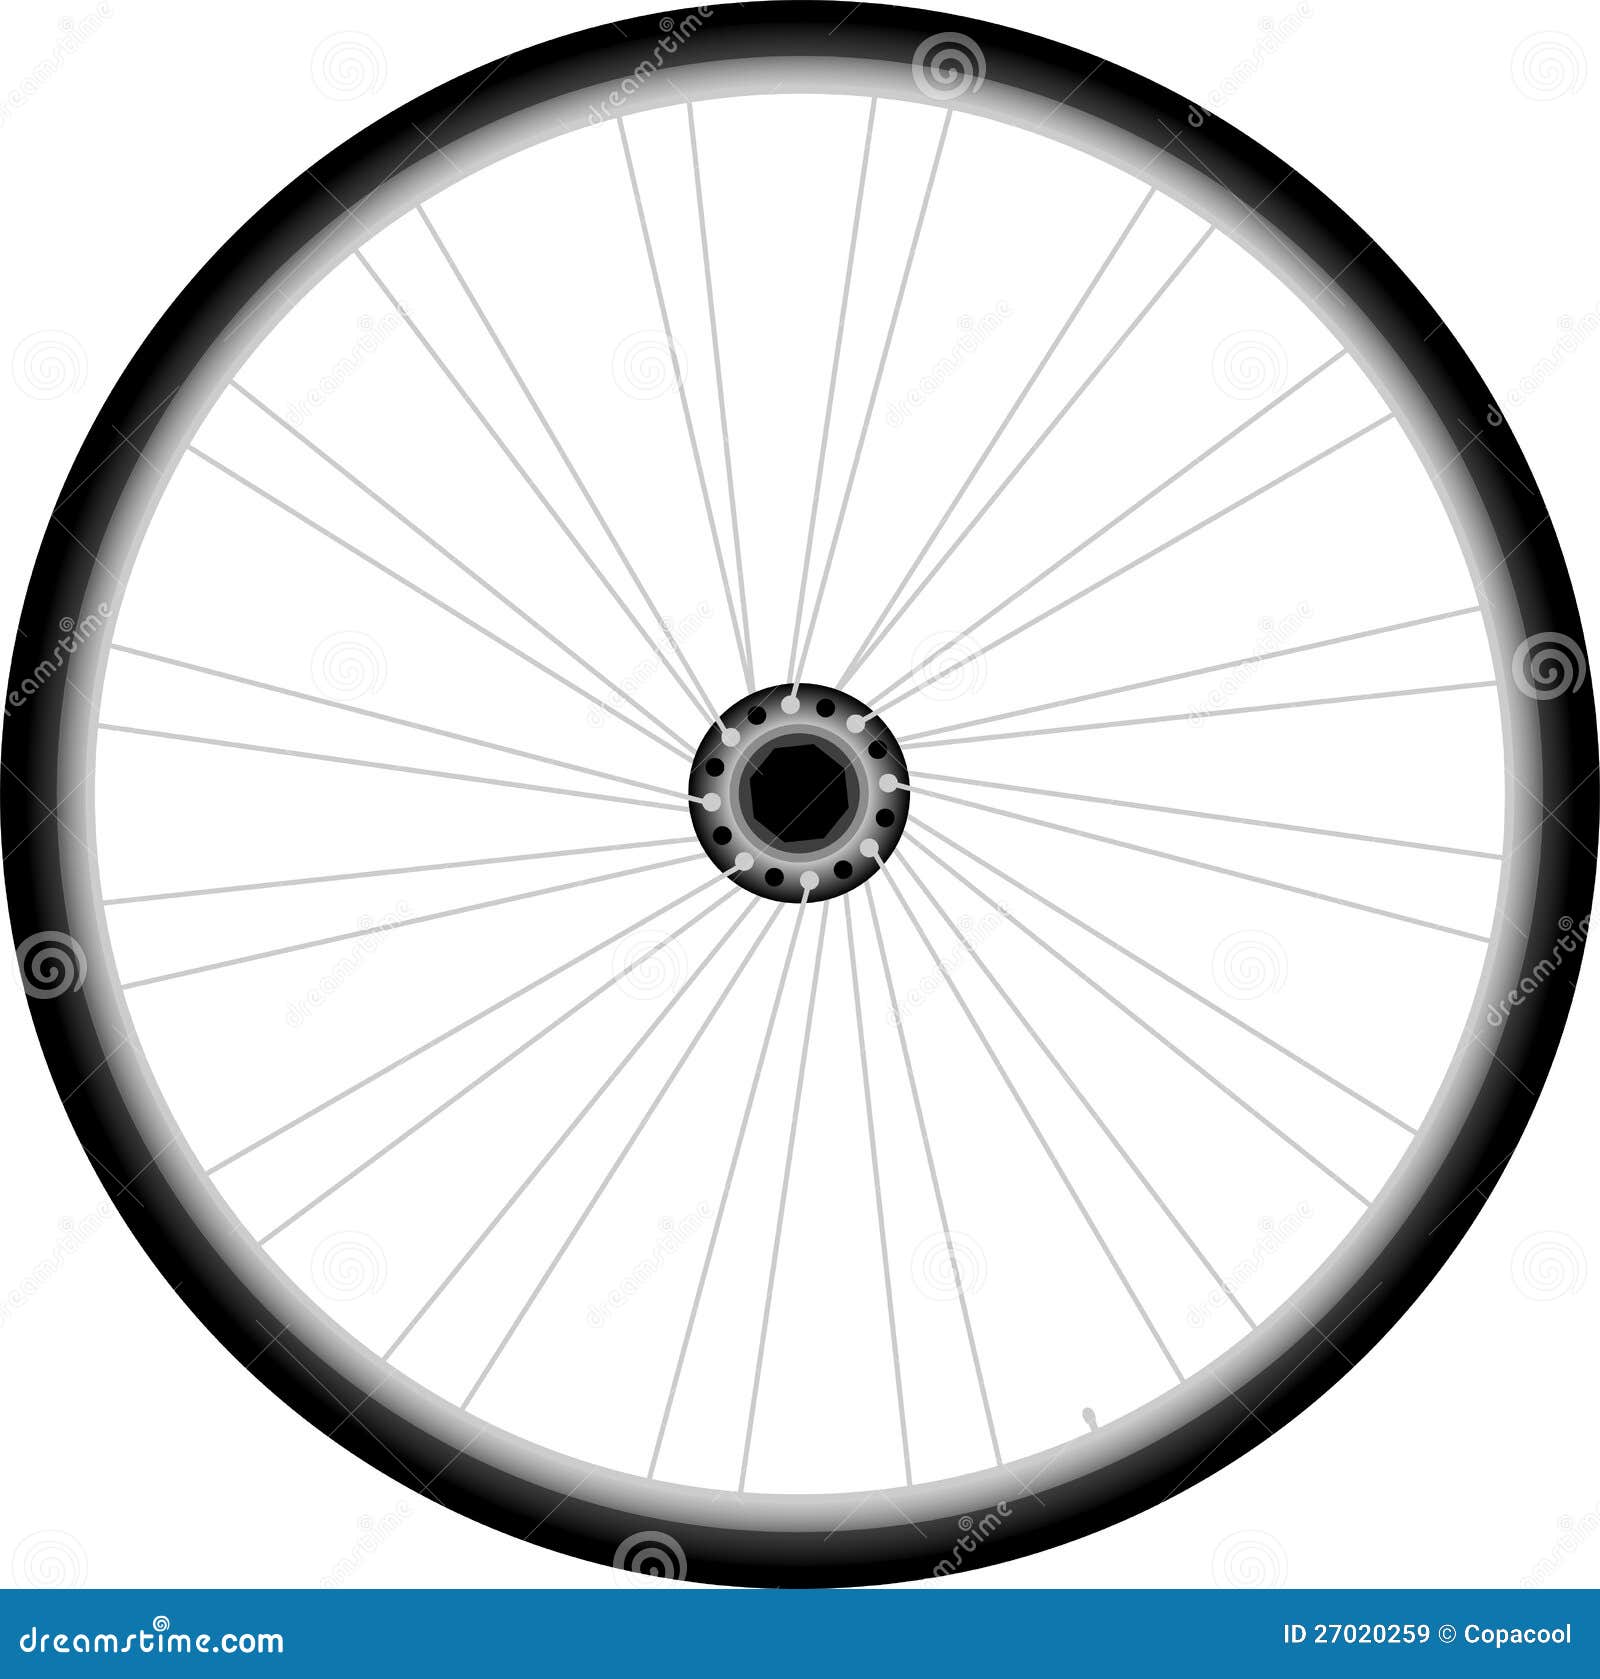 bike wheel clip art free - photo #50